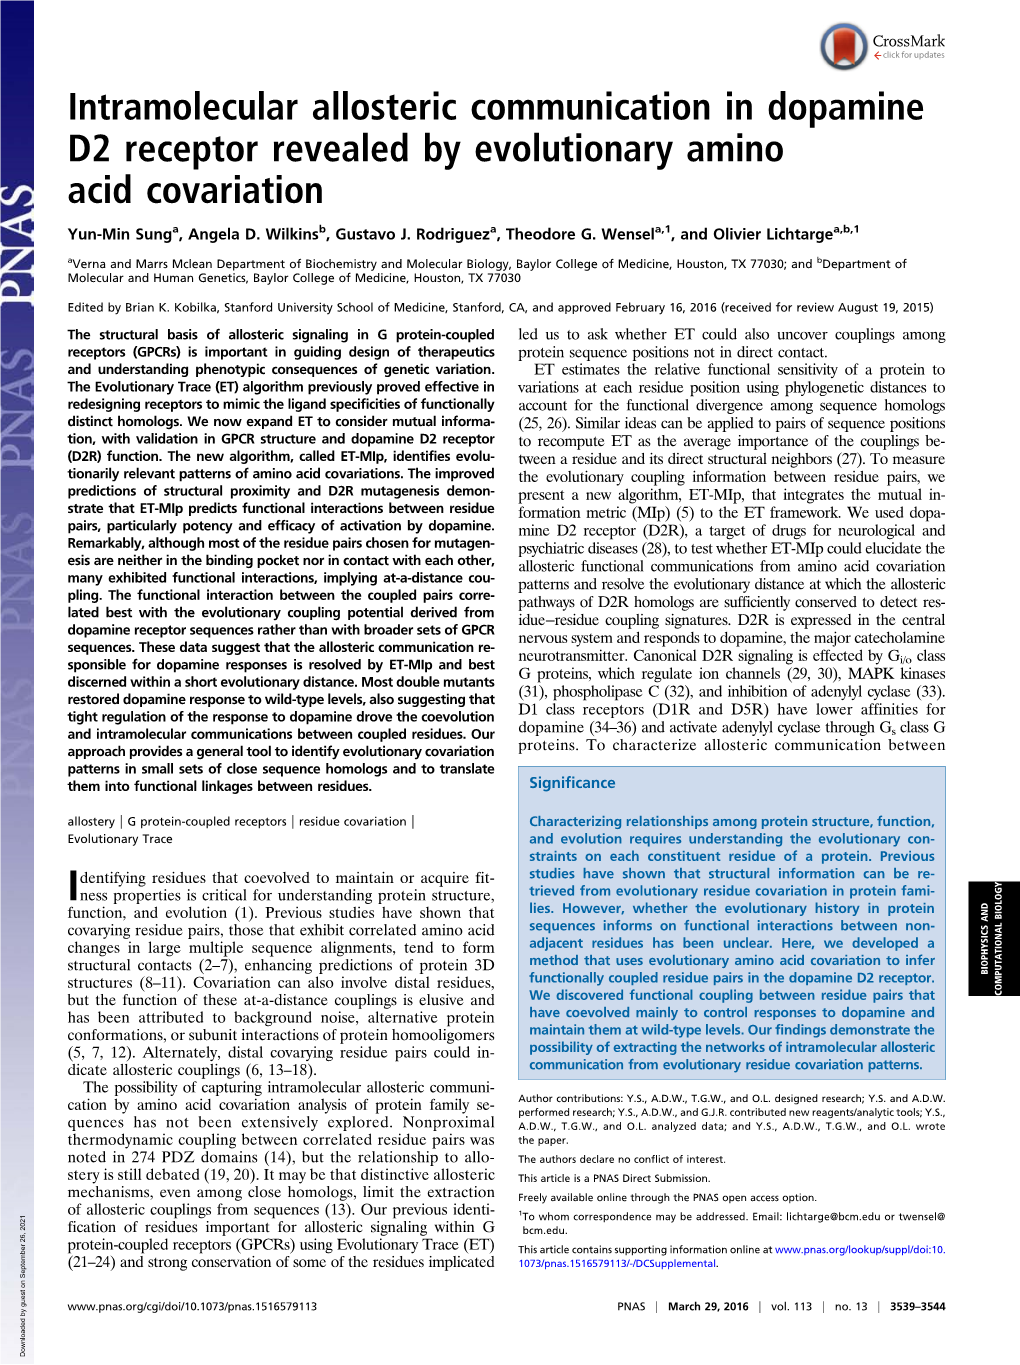 Intramolecular Allosteric Communication in Dopamine D2 Receptor Revealed by Evolutionary Amino Acid Covariation